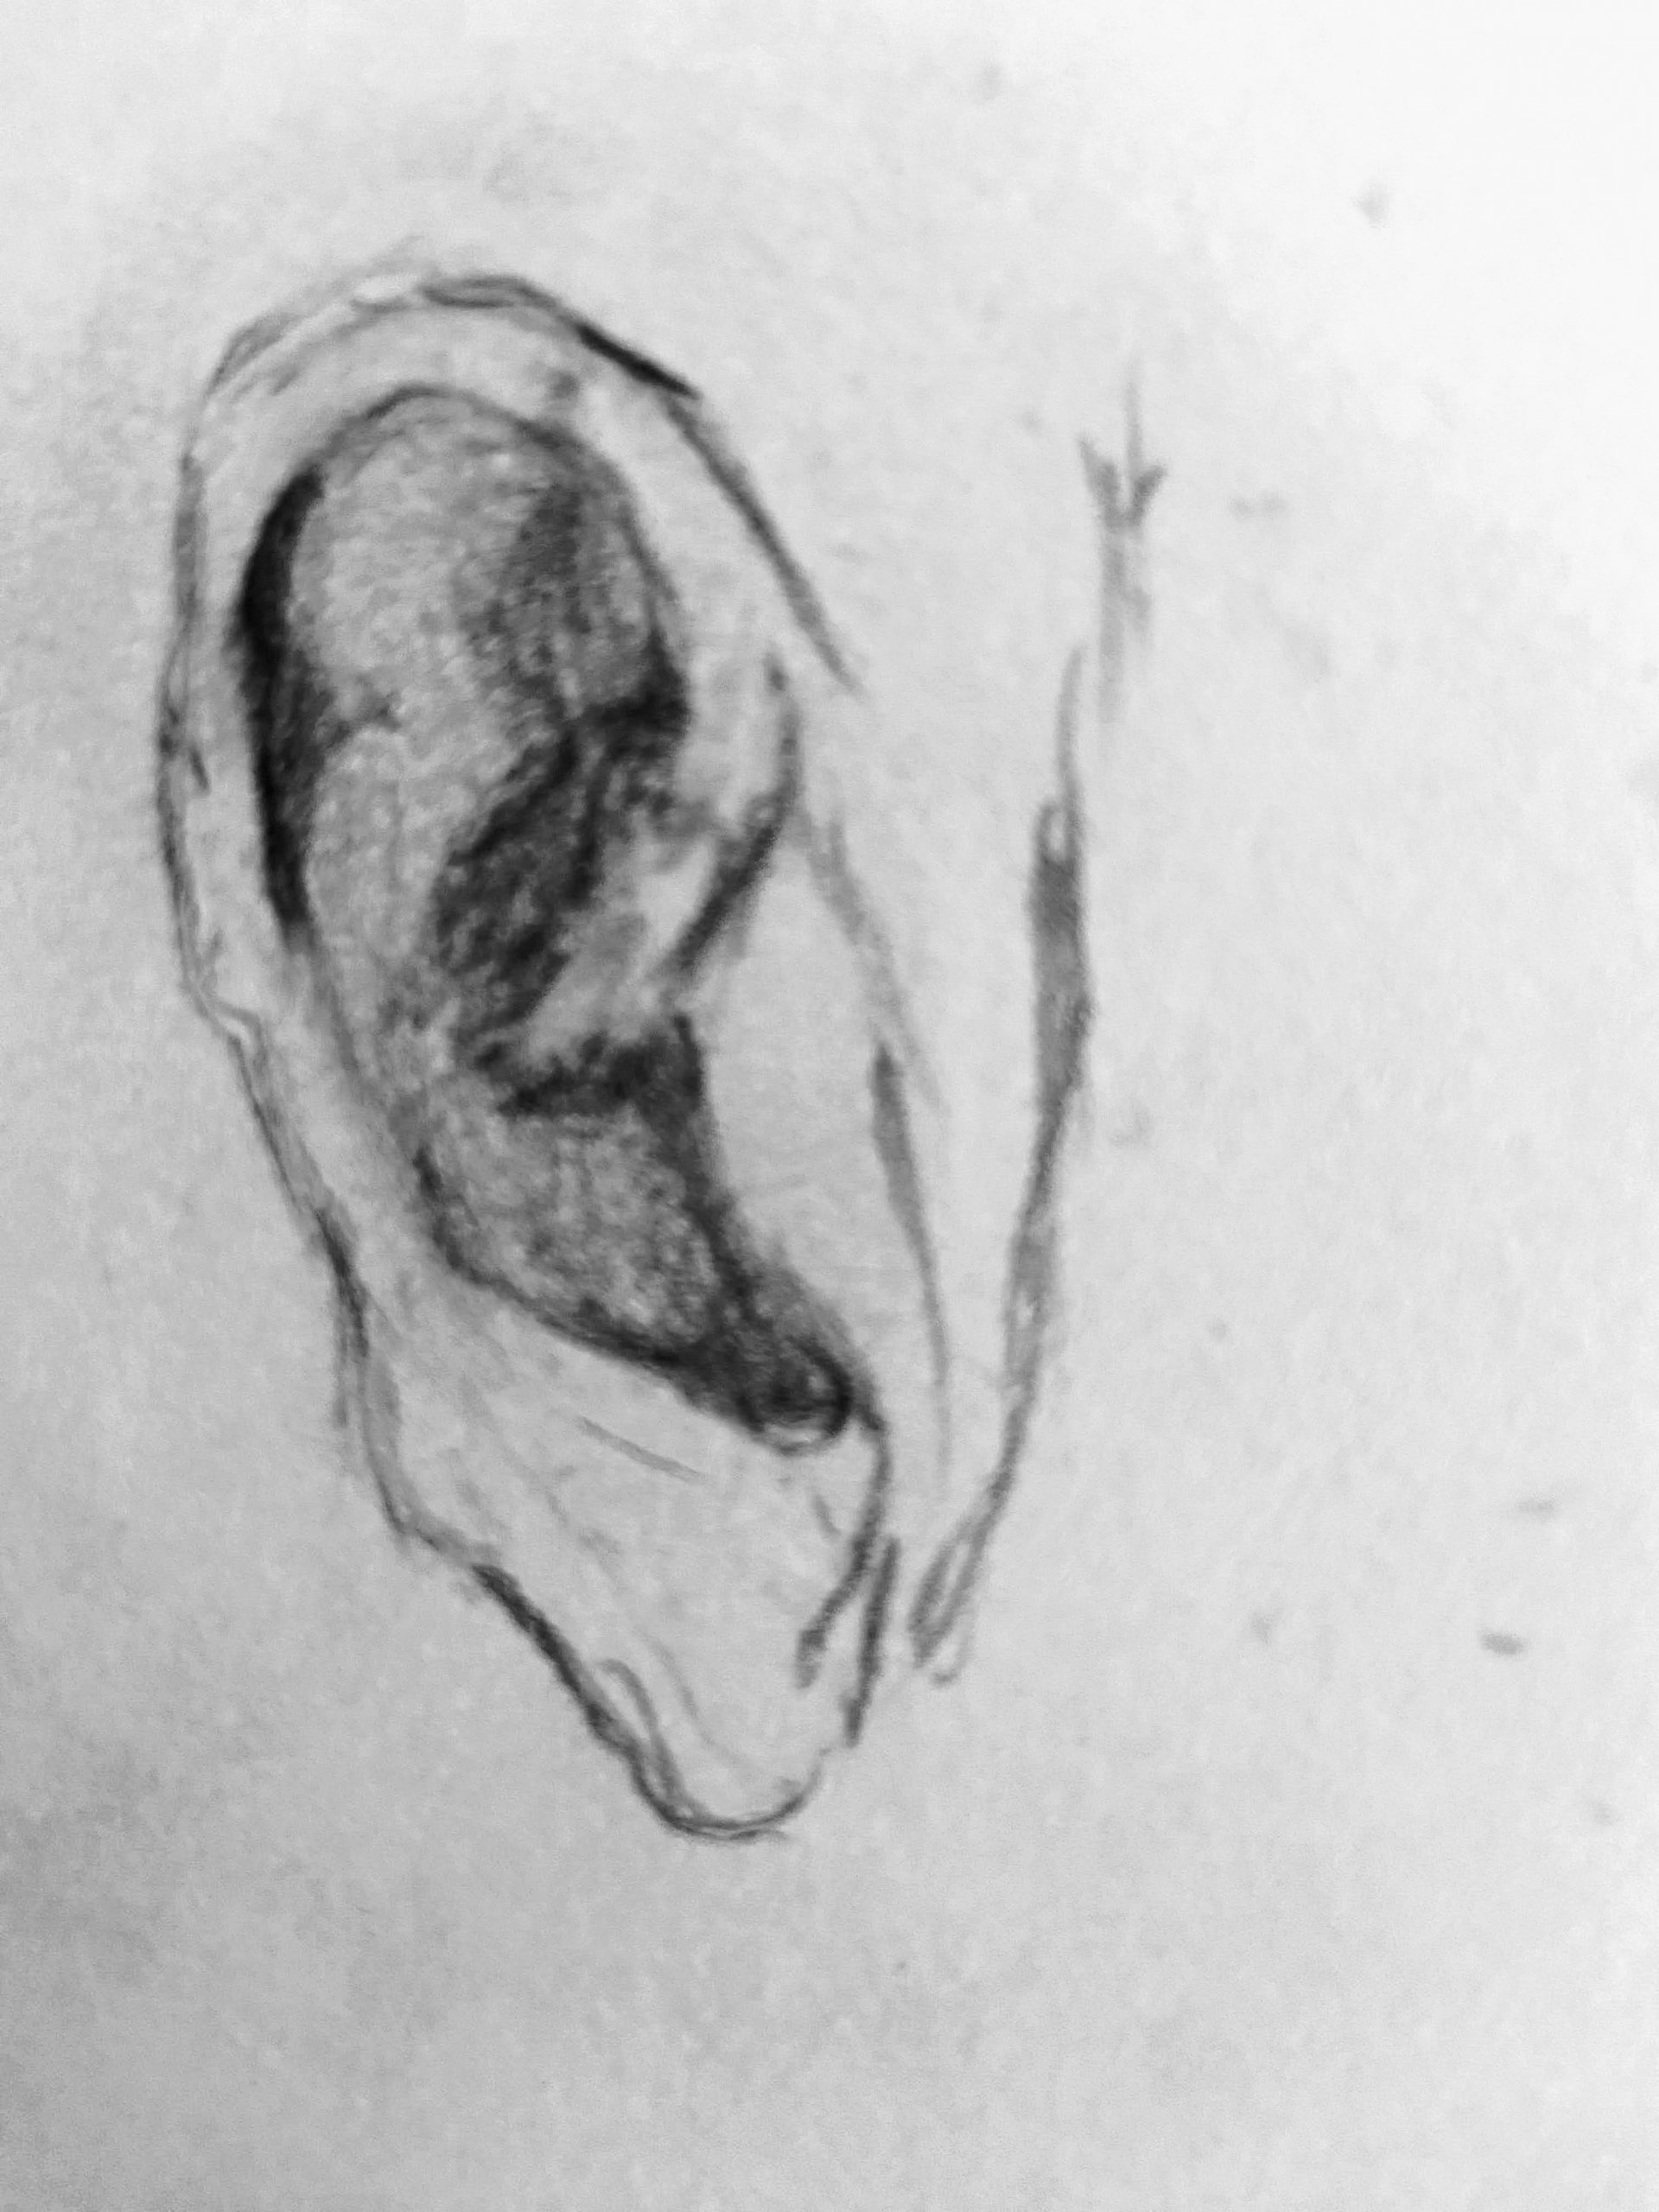 Pencil sketch of an ear